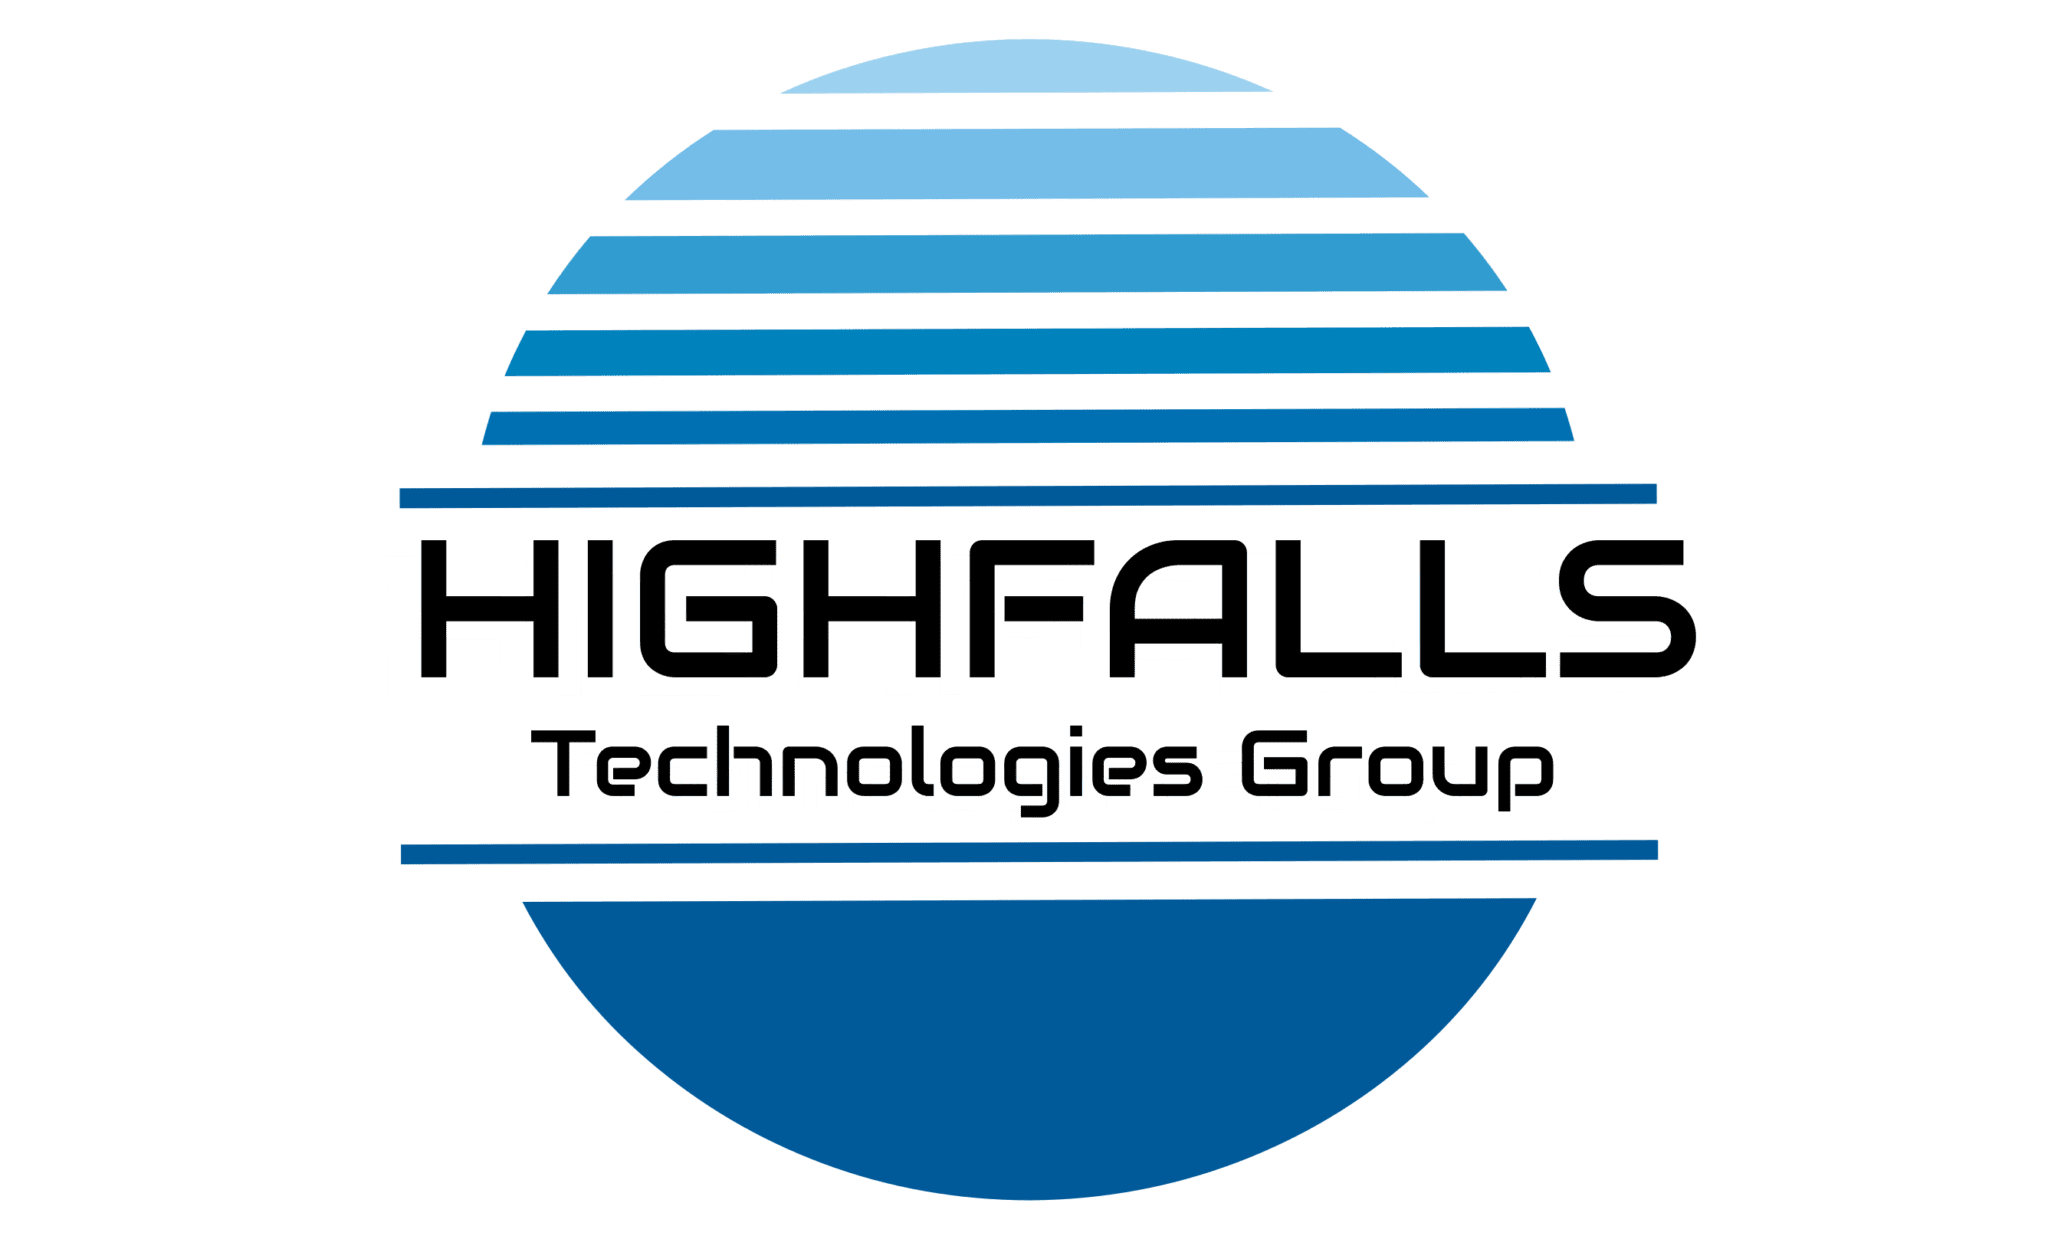 Highfalls Technologies Group